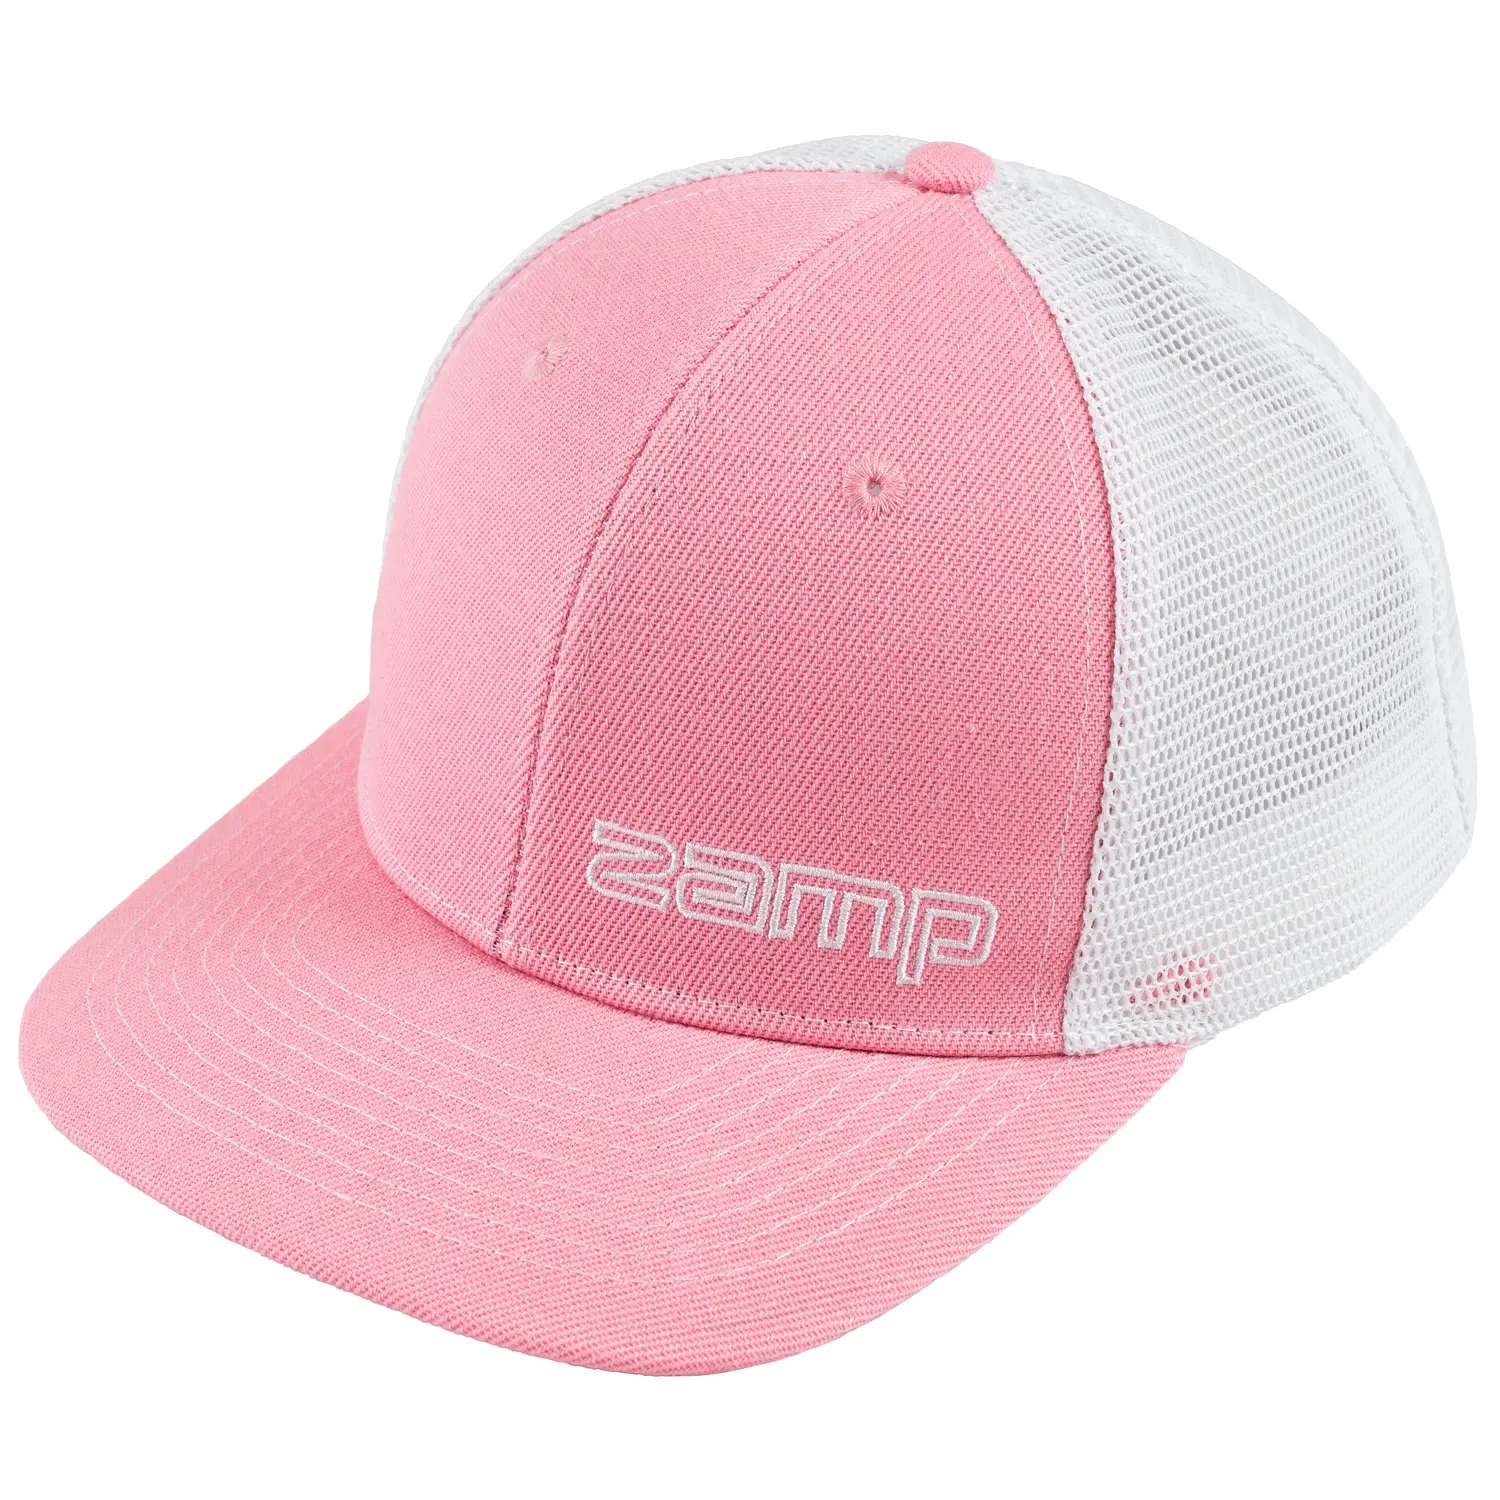 Zamp Racing Hat